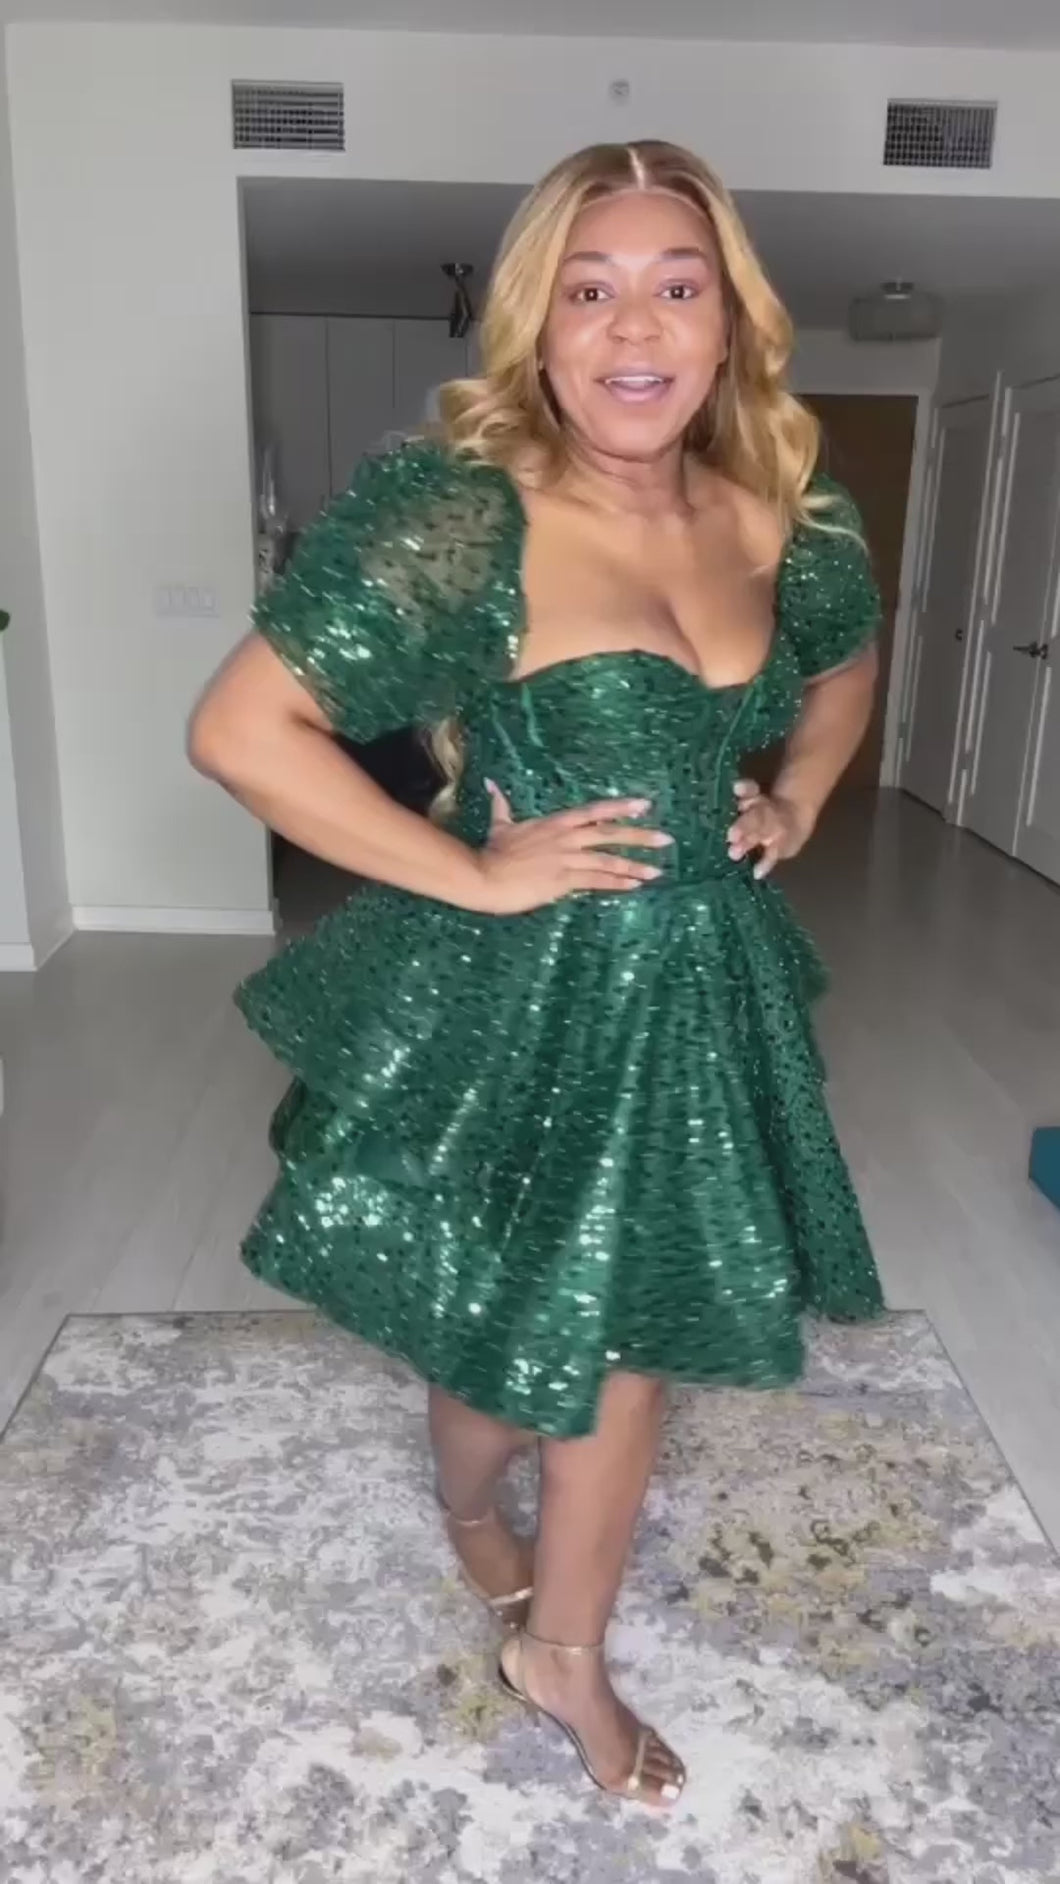 Emerald Sequins Dress